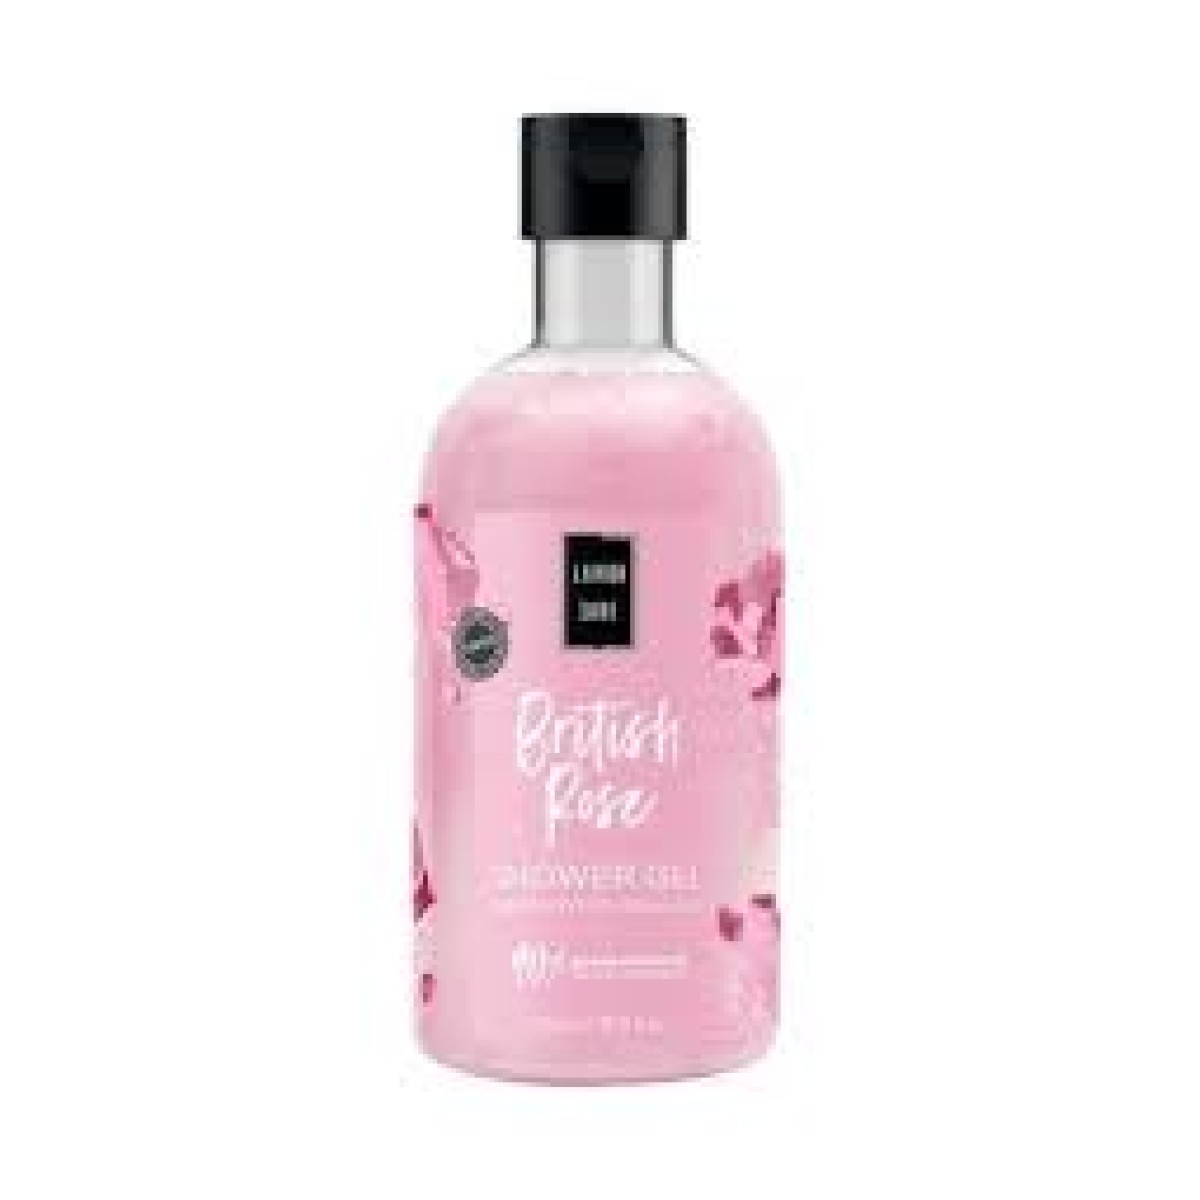 Lavish Care | Brittish Rose Shower Gel |Αφρόλουτρο 500ml